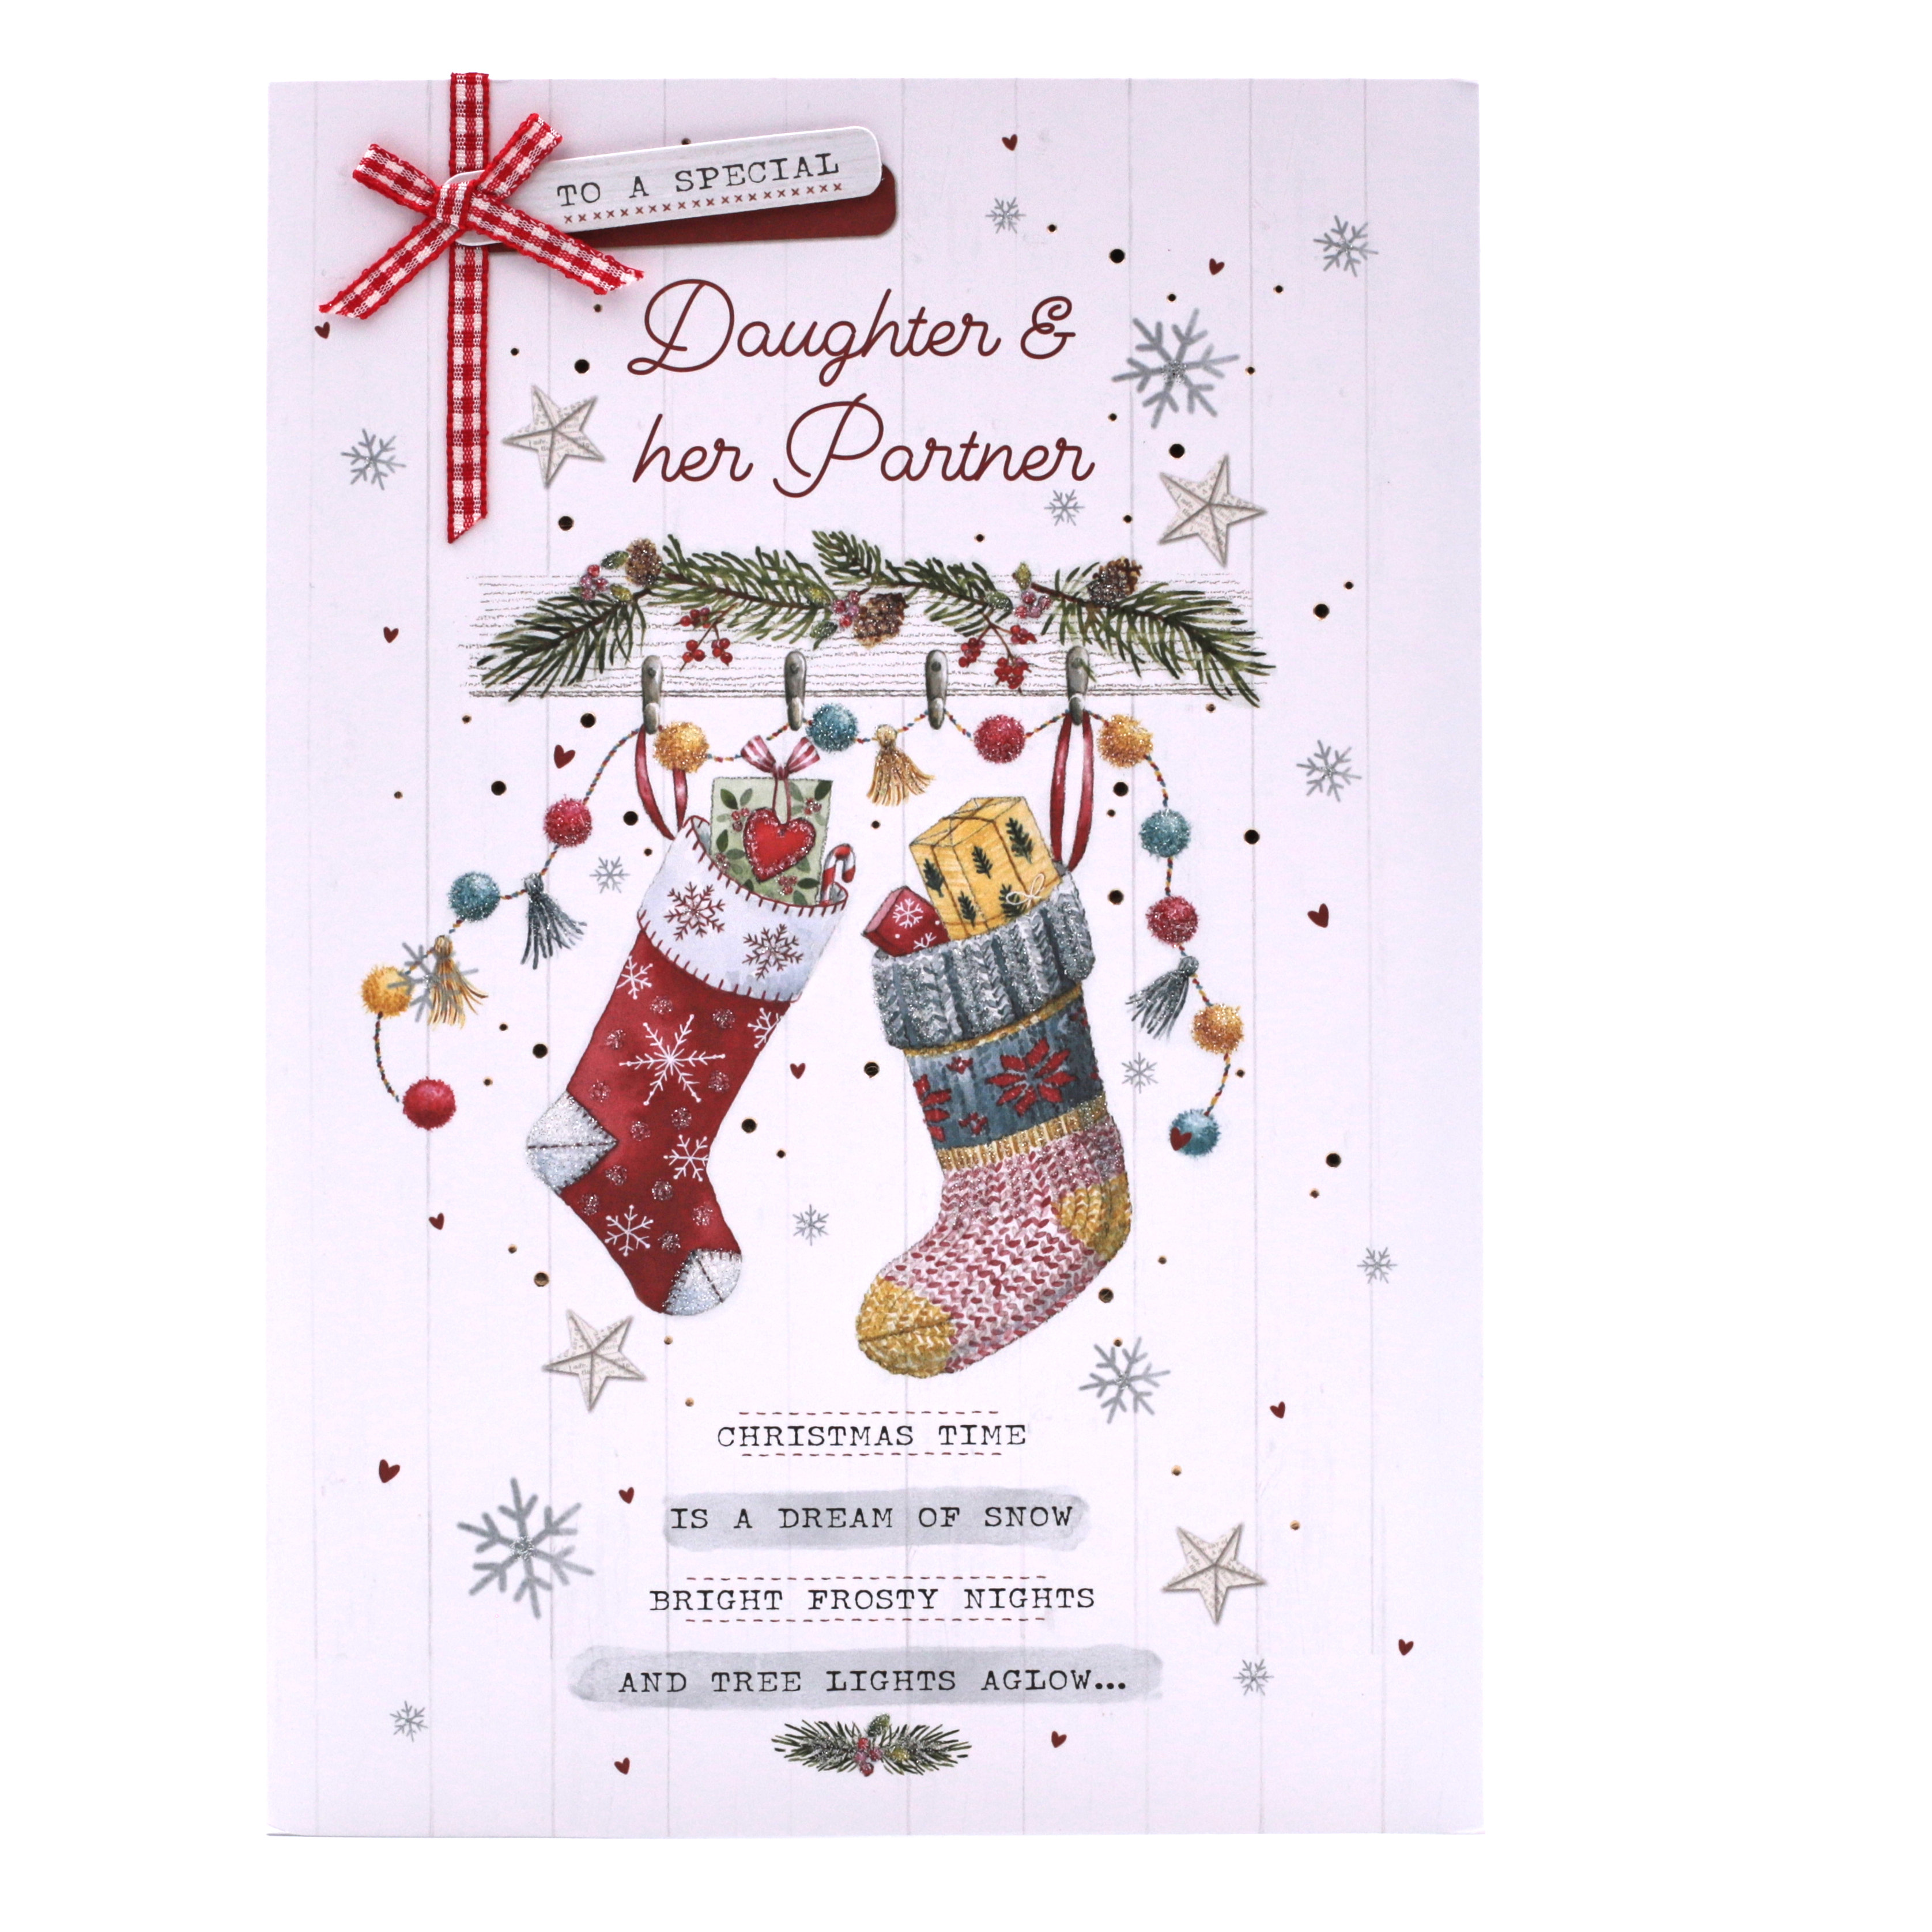 Christmas Card - Daughter & Partner Stockings